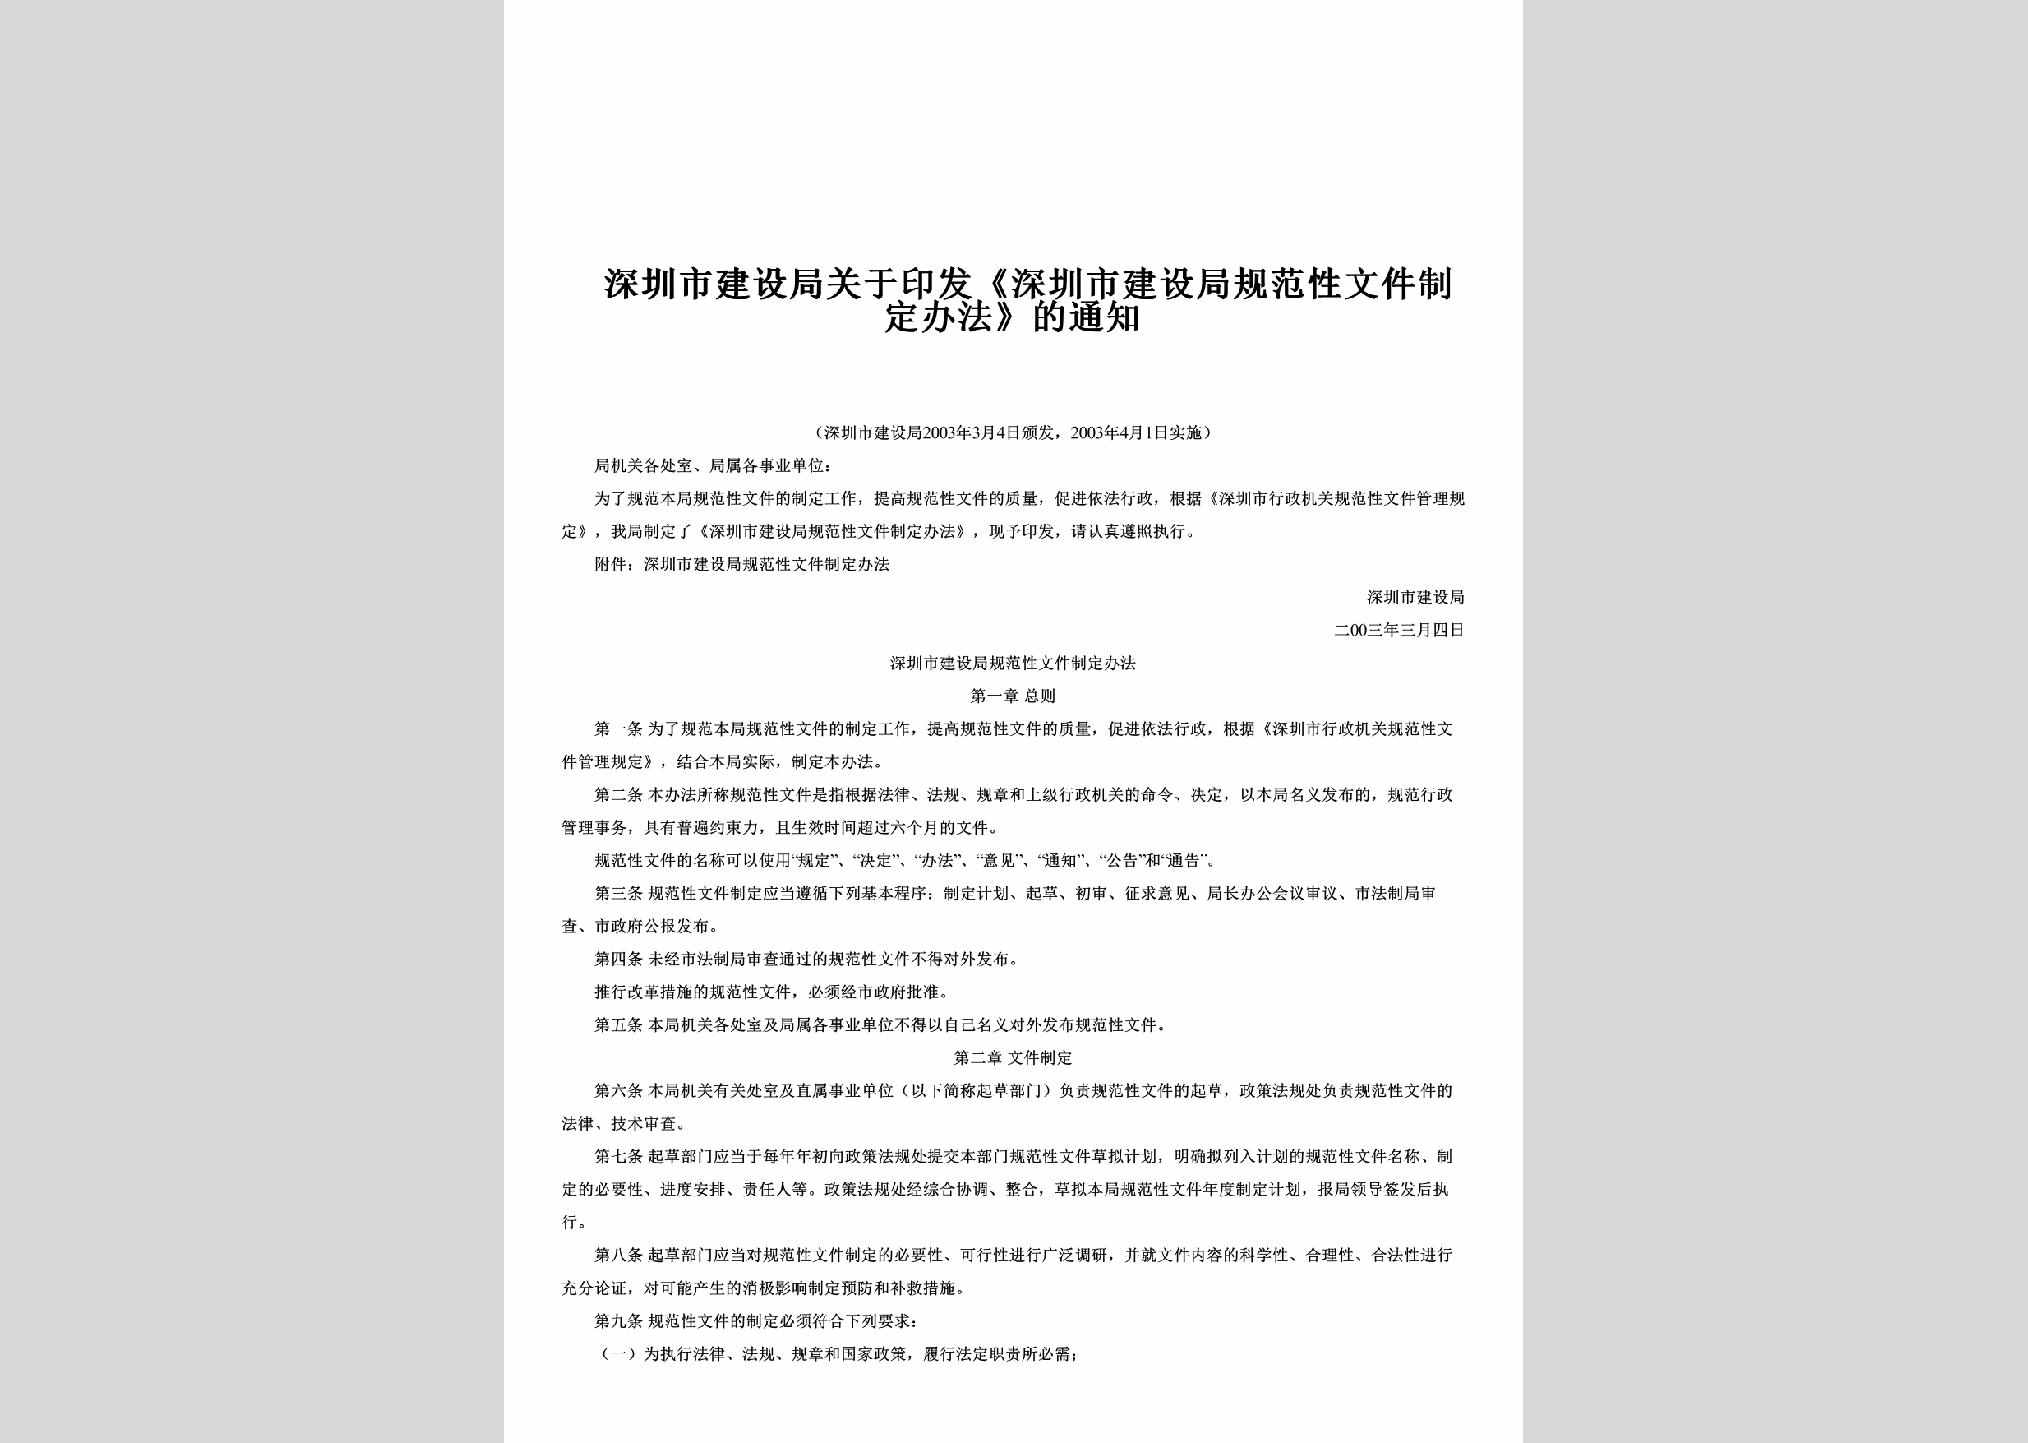 GD-WJZDBFTZ-2003：关于印发《深圳市建设局规范性文件制定办法》的通知